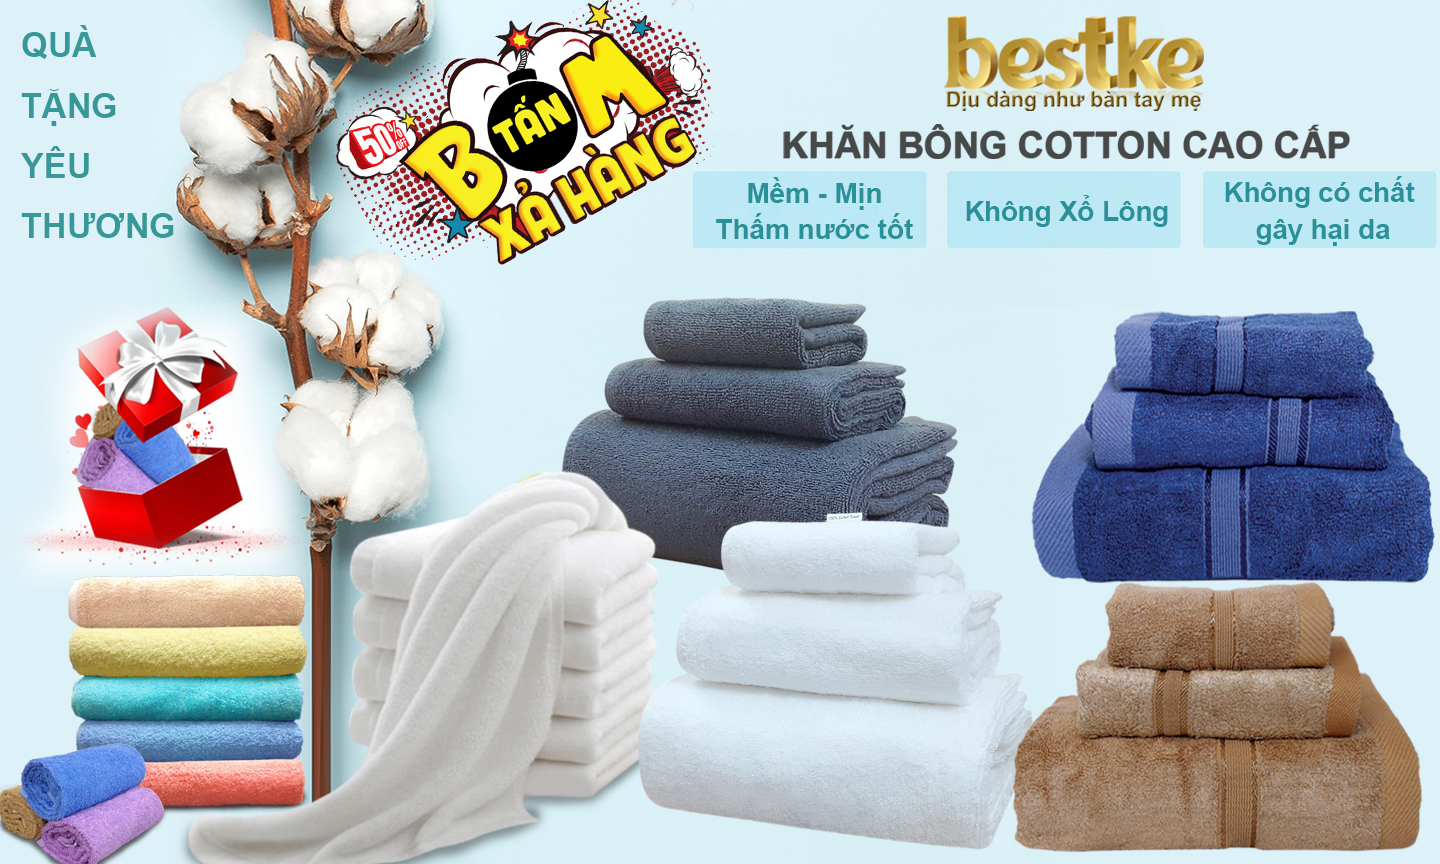 Combo 7 cái Khăn Mặt bestke 100% Cotton Xuất Khẩu Hàn Quốc màu dark blue, towels manufacturer, size 34*34cm = 60g/cái